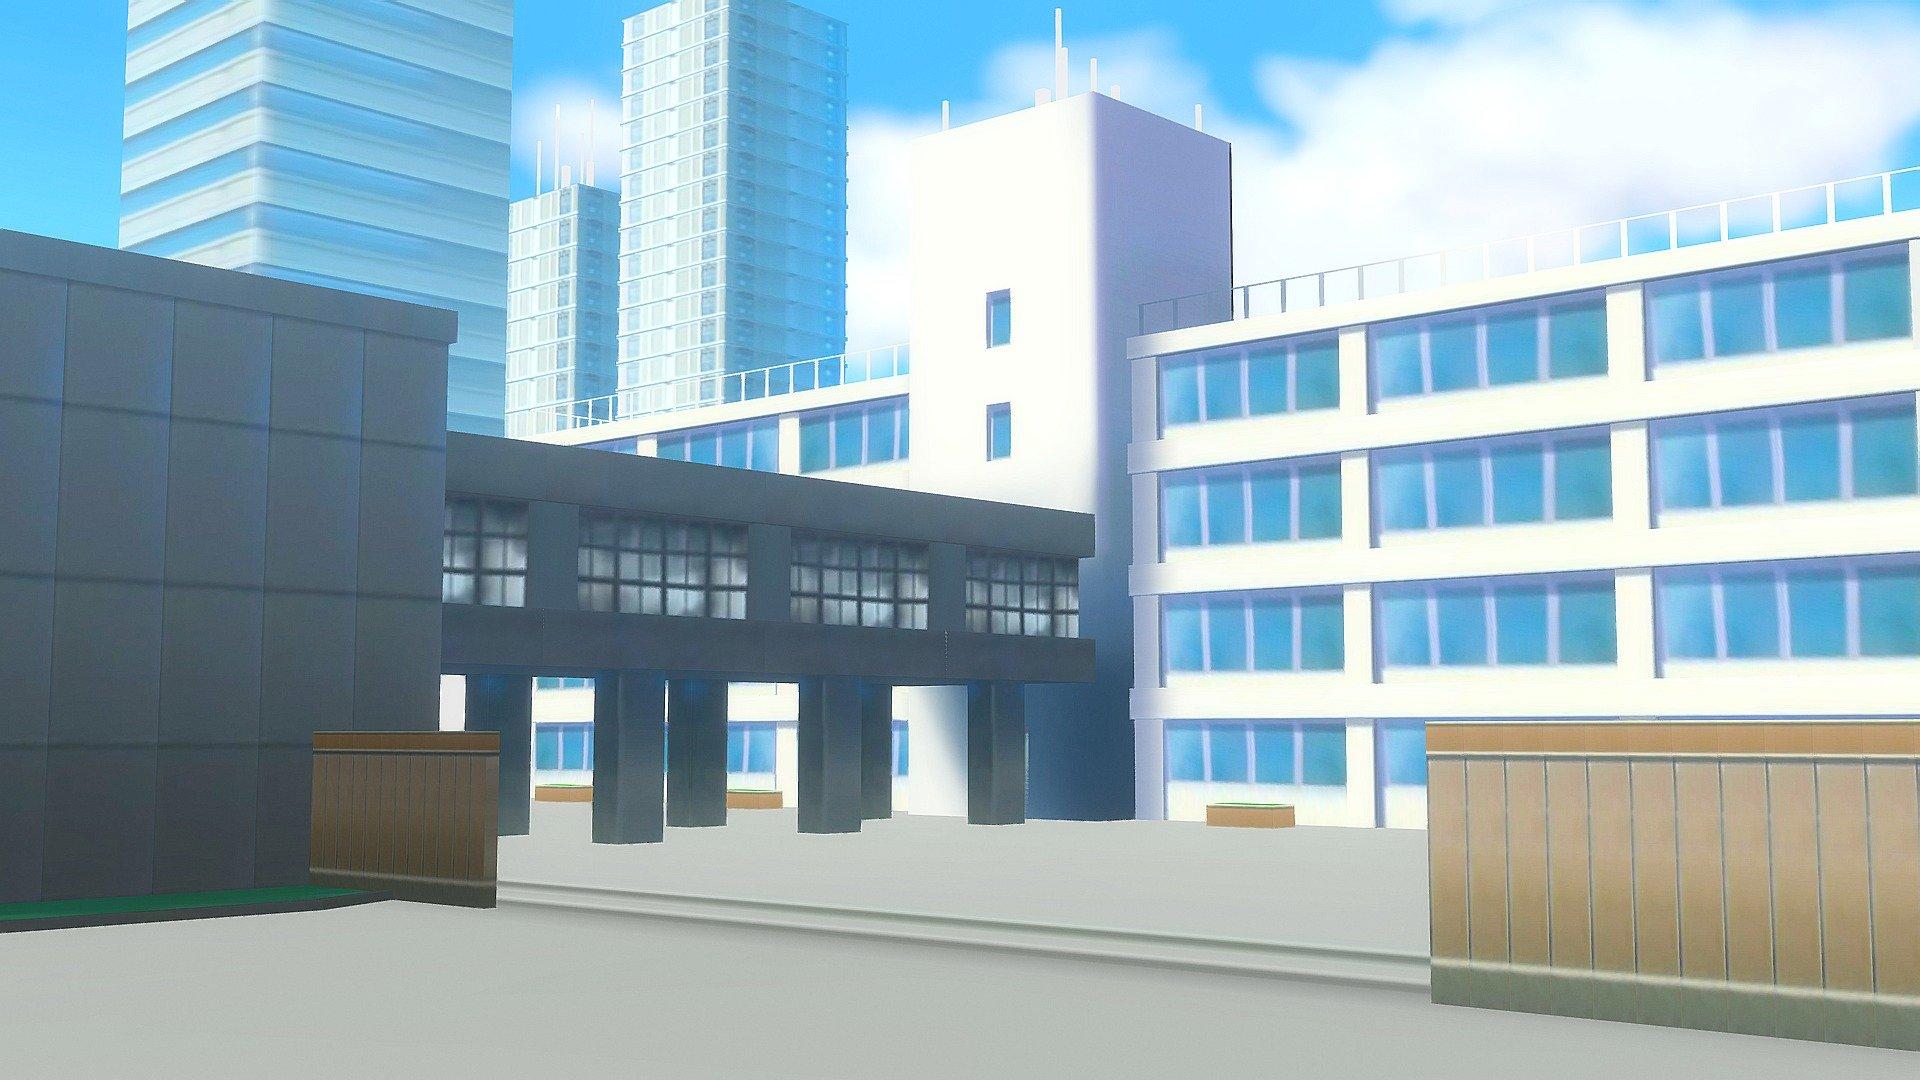 Anime School Building Wallpapers Top Free Anime School Building